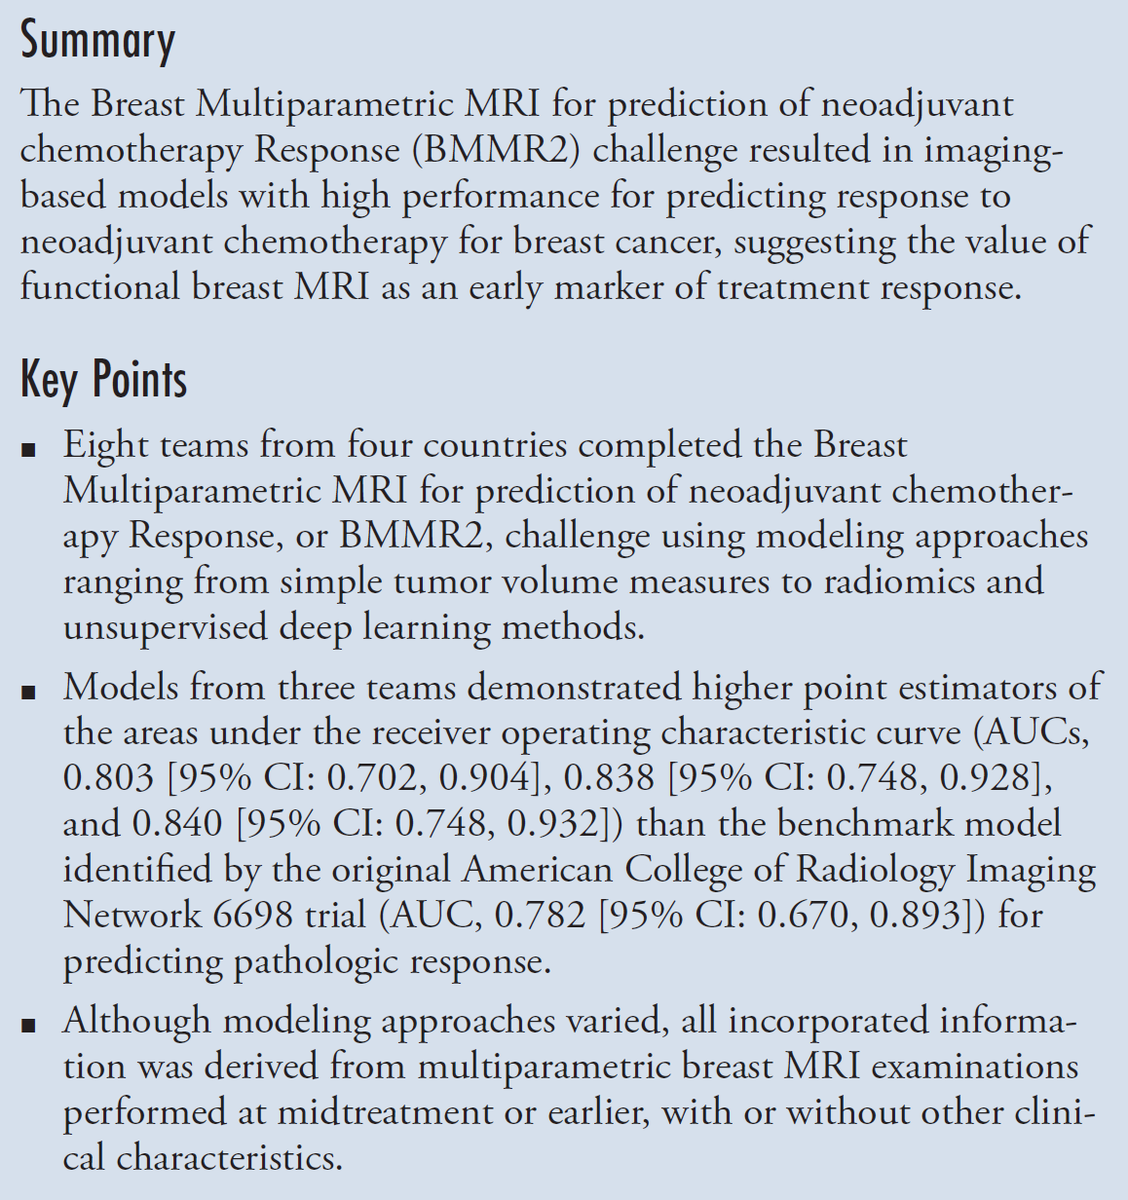 Li W, Partridge SC, Newitt DC, et al. Breast Multiparametric MRI for Prediction of Neoadjuvant Chemotherapy Response in Breast Cancer: The BMMR2 Challenge. Radiol Imaging Cancer. 2024 Jan;6(1):e230033. doi: 10.1148/rycan.230033. PMID: 38180338.